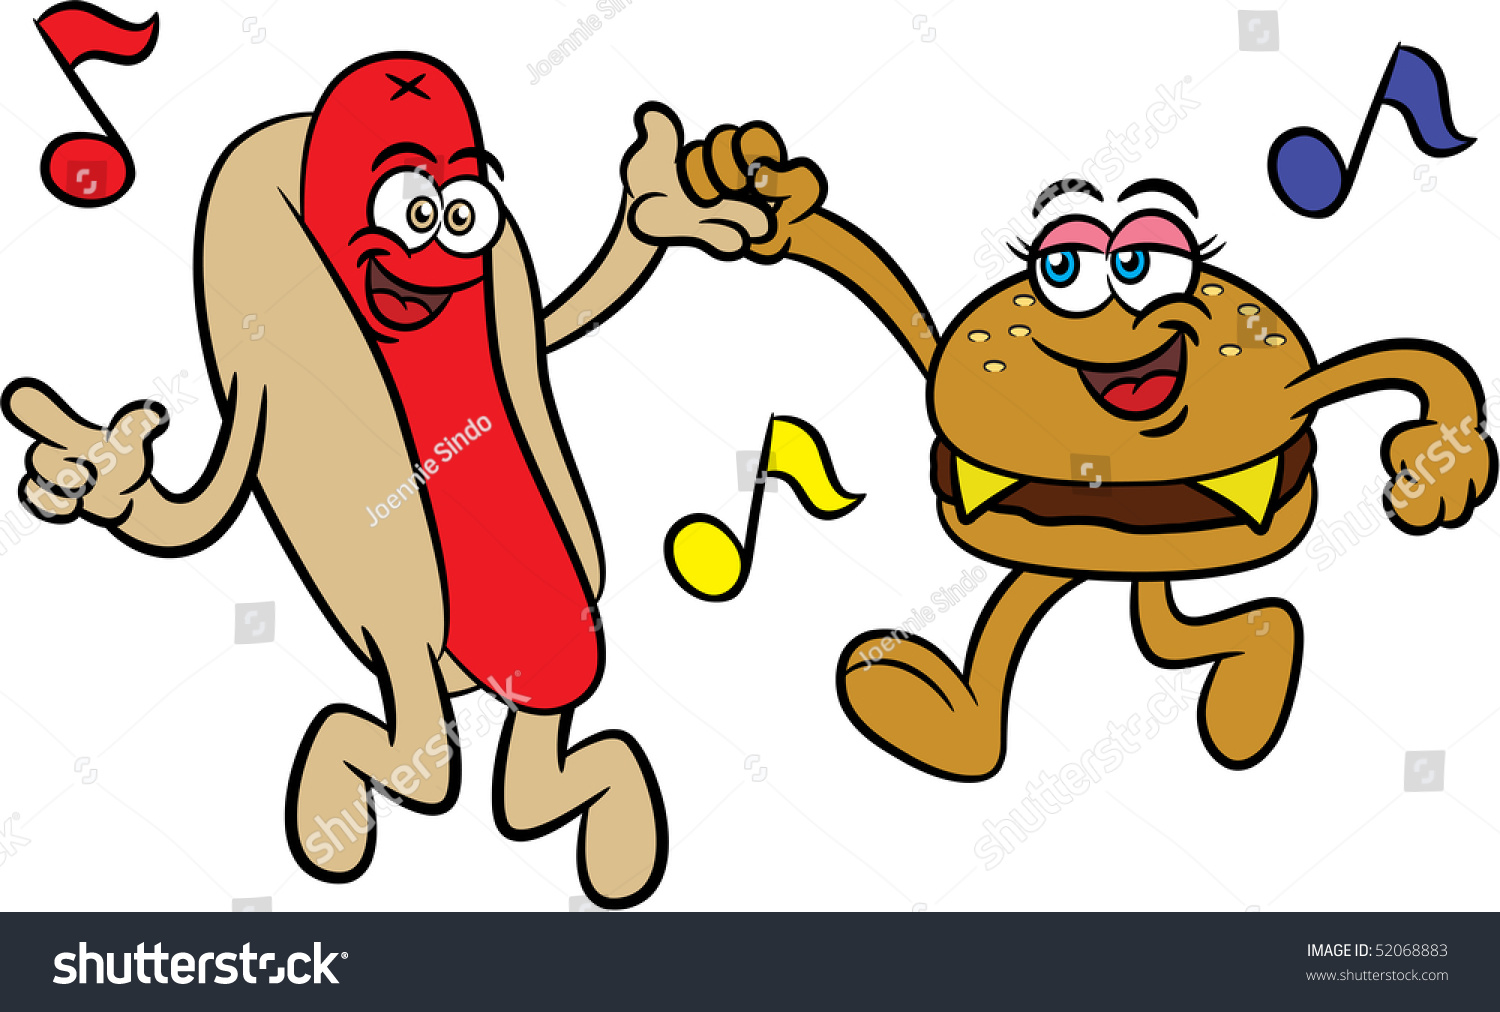 dancing hot dog clipart - photo #14